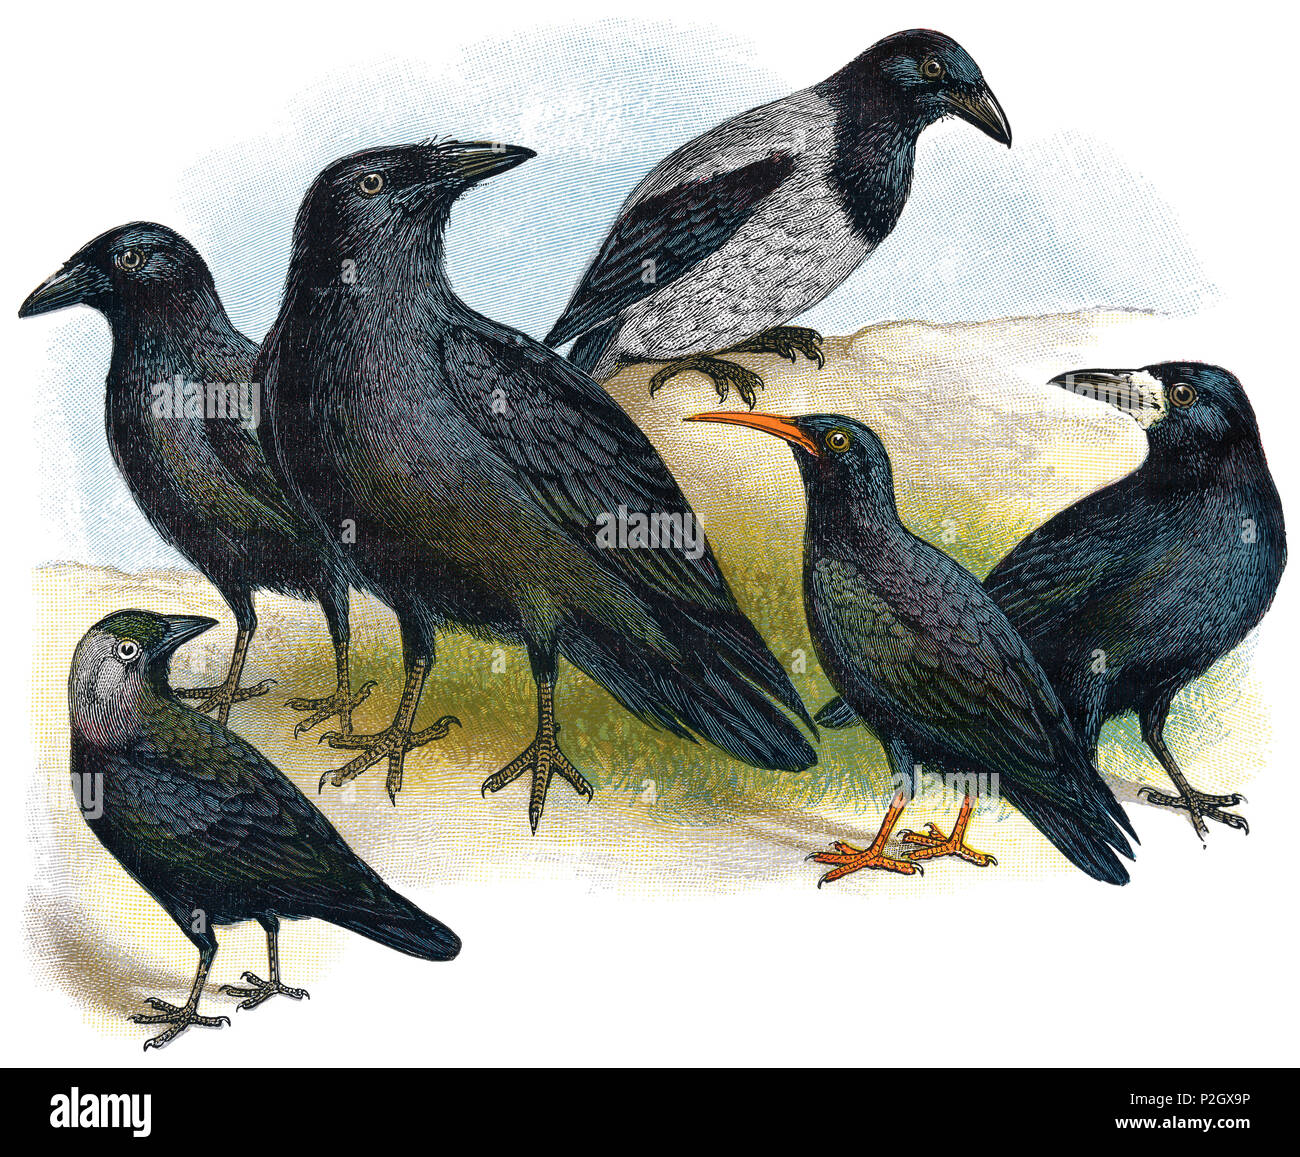 1898 colour engraving of birds from the Corvidae family. Left to right, carrion crow (corvus corone), jackdaw (coloeus monedula), common raven (corvus corax), hooded crow (corvus cornix), red-billed chough (pyrrhocorax pyrrhocorax) and rook (corvus frugilegus). Stock Photo